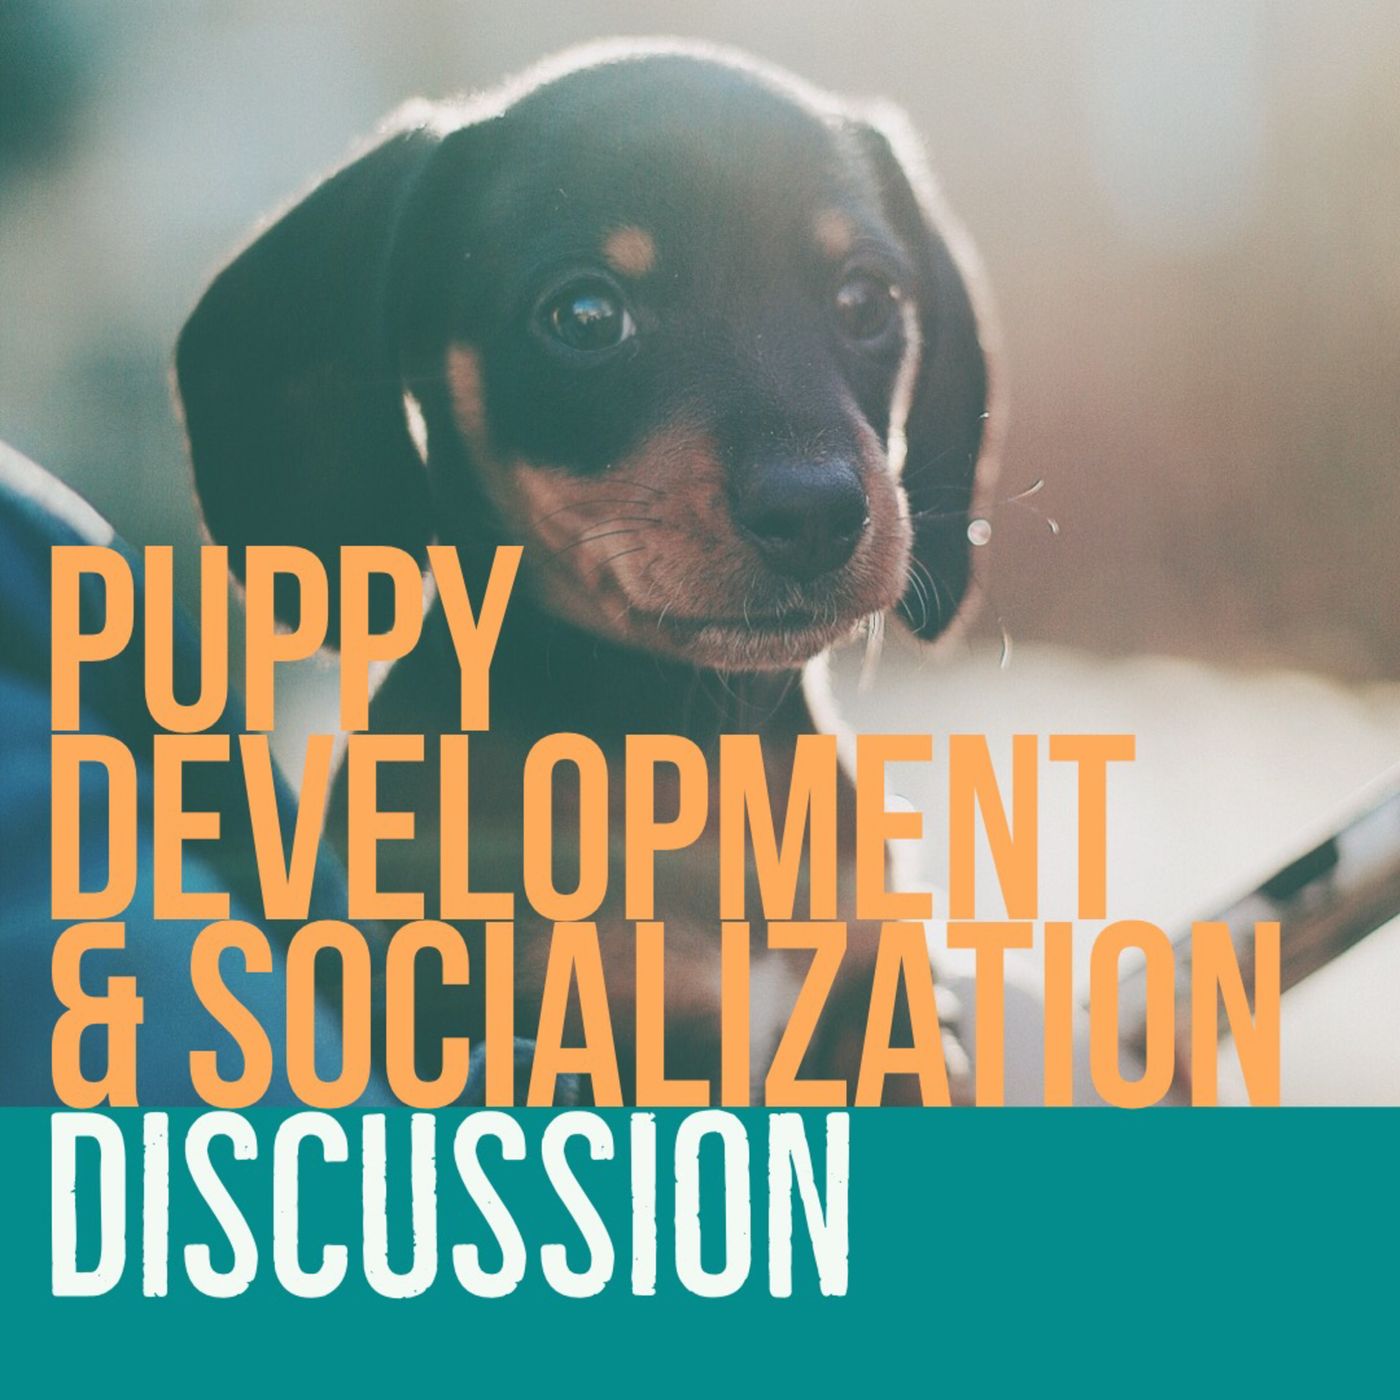 Puppy Development & Socialization